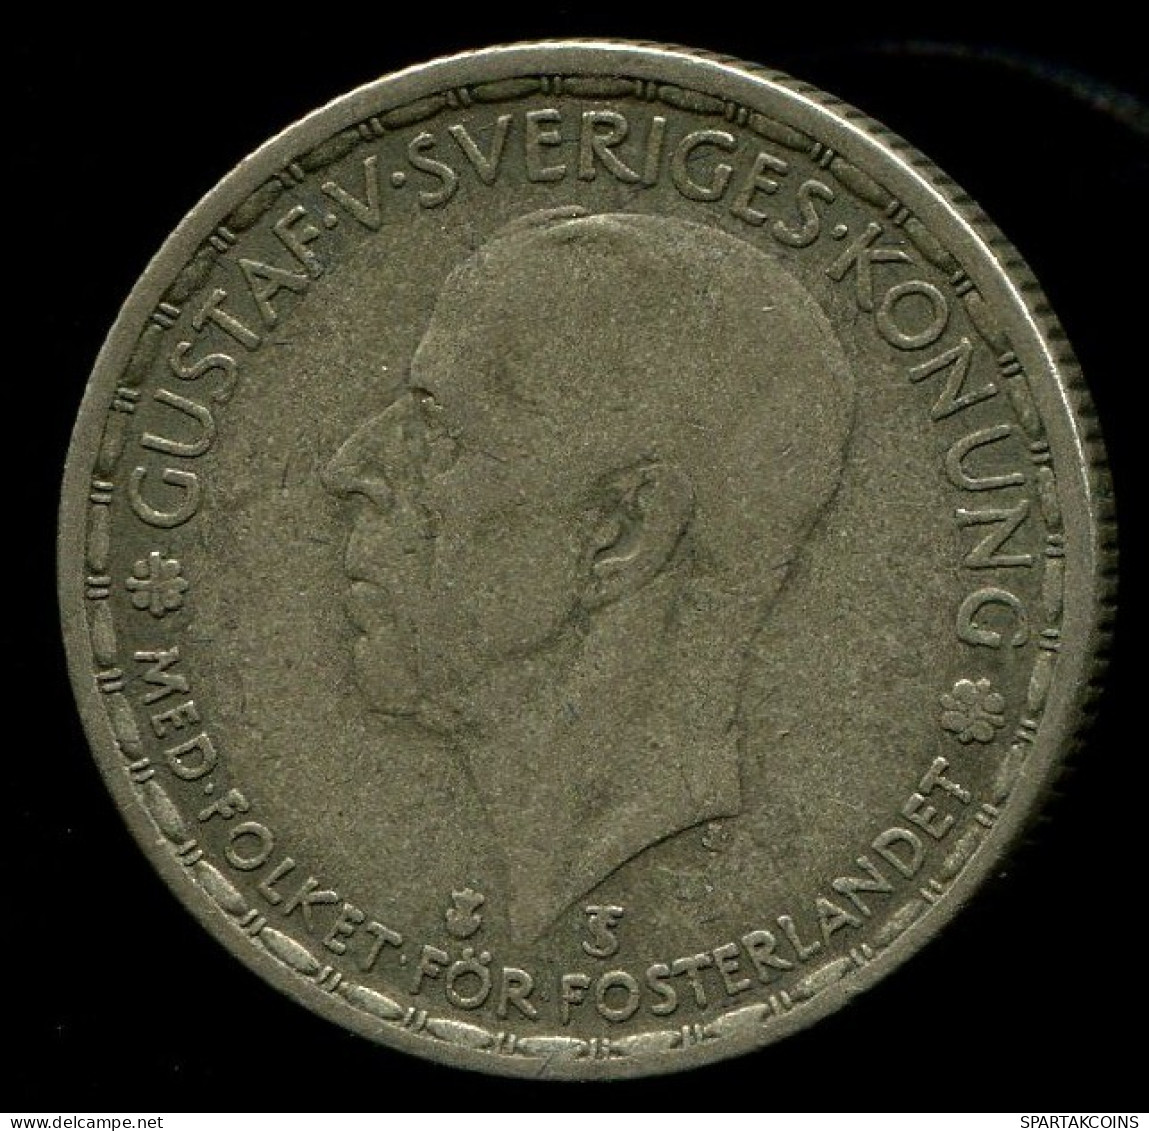 1 KRONA 1946 SWEDEN SILVER Coin #W10422.10.U.A - Sweden